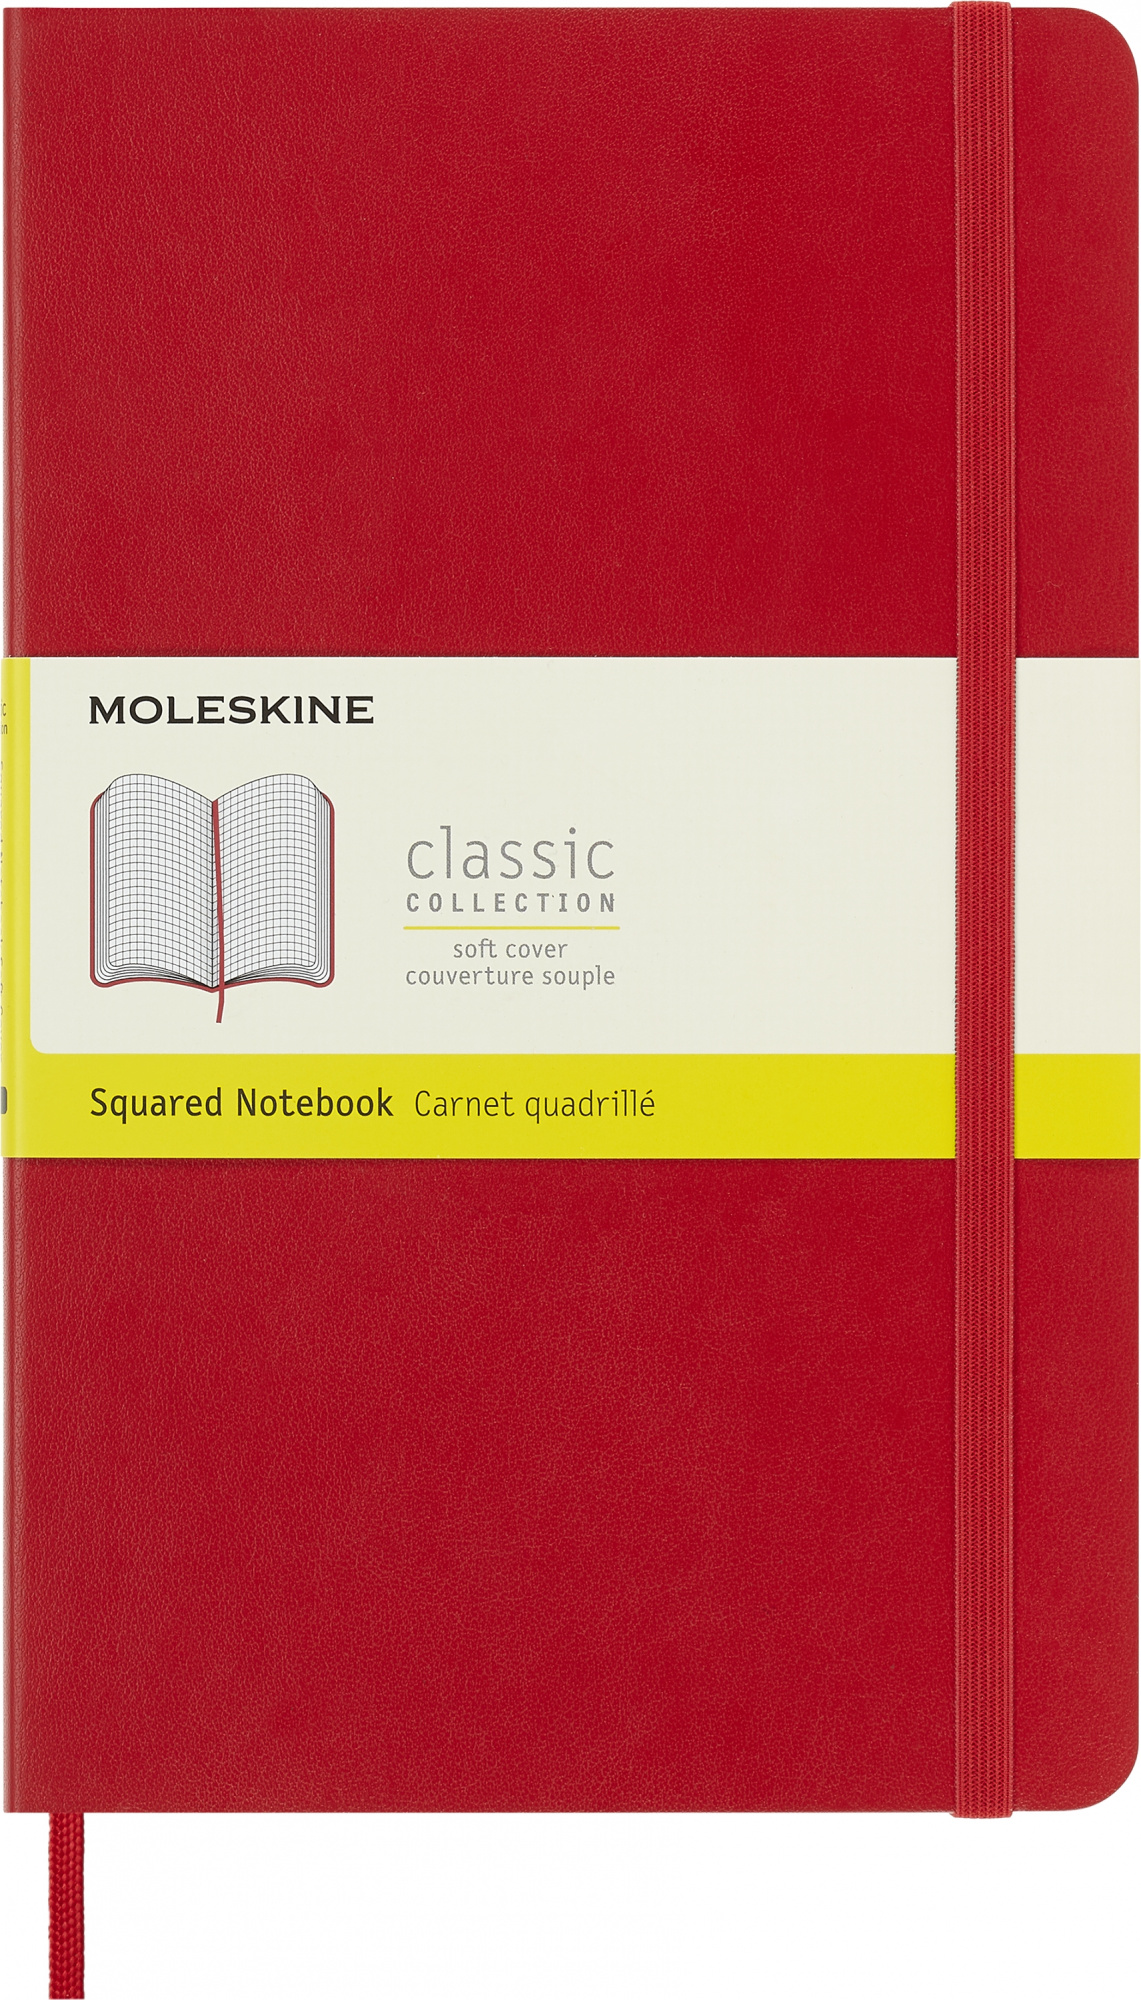 Блокнот Moleskine CLASSIC SOFT QP617F2 Large 130х210мм 192стр. клетка мягкая обложка красный